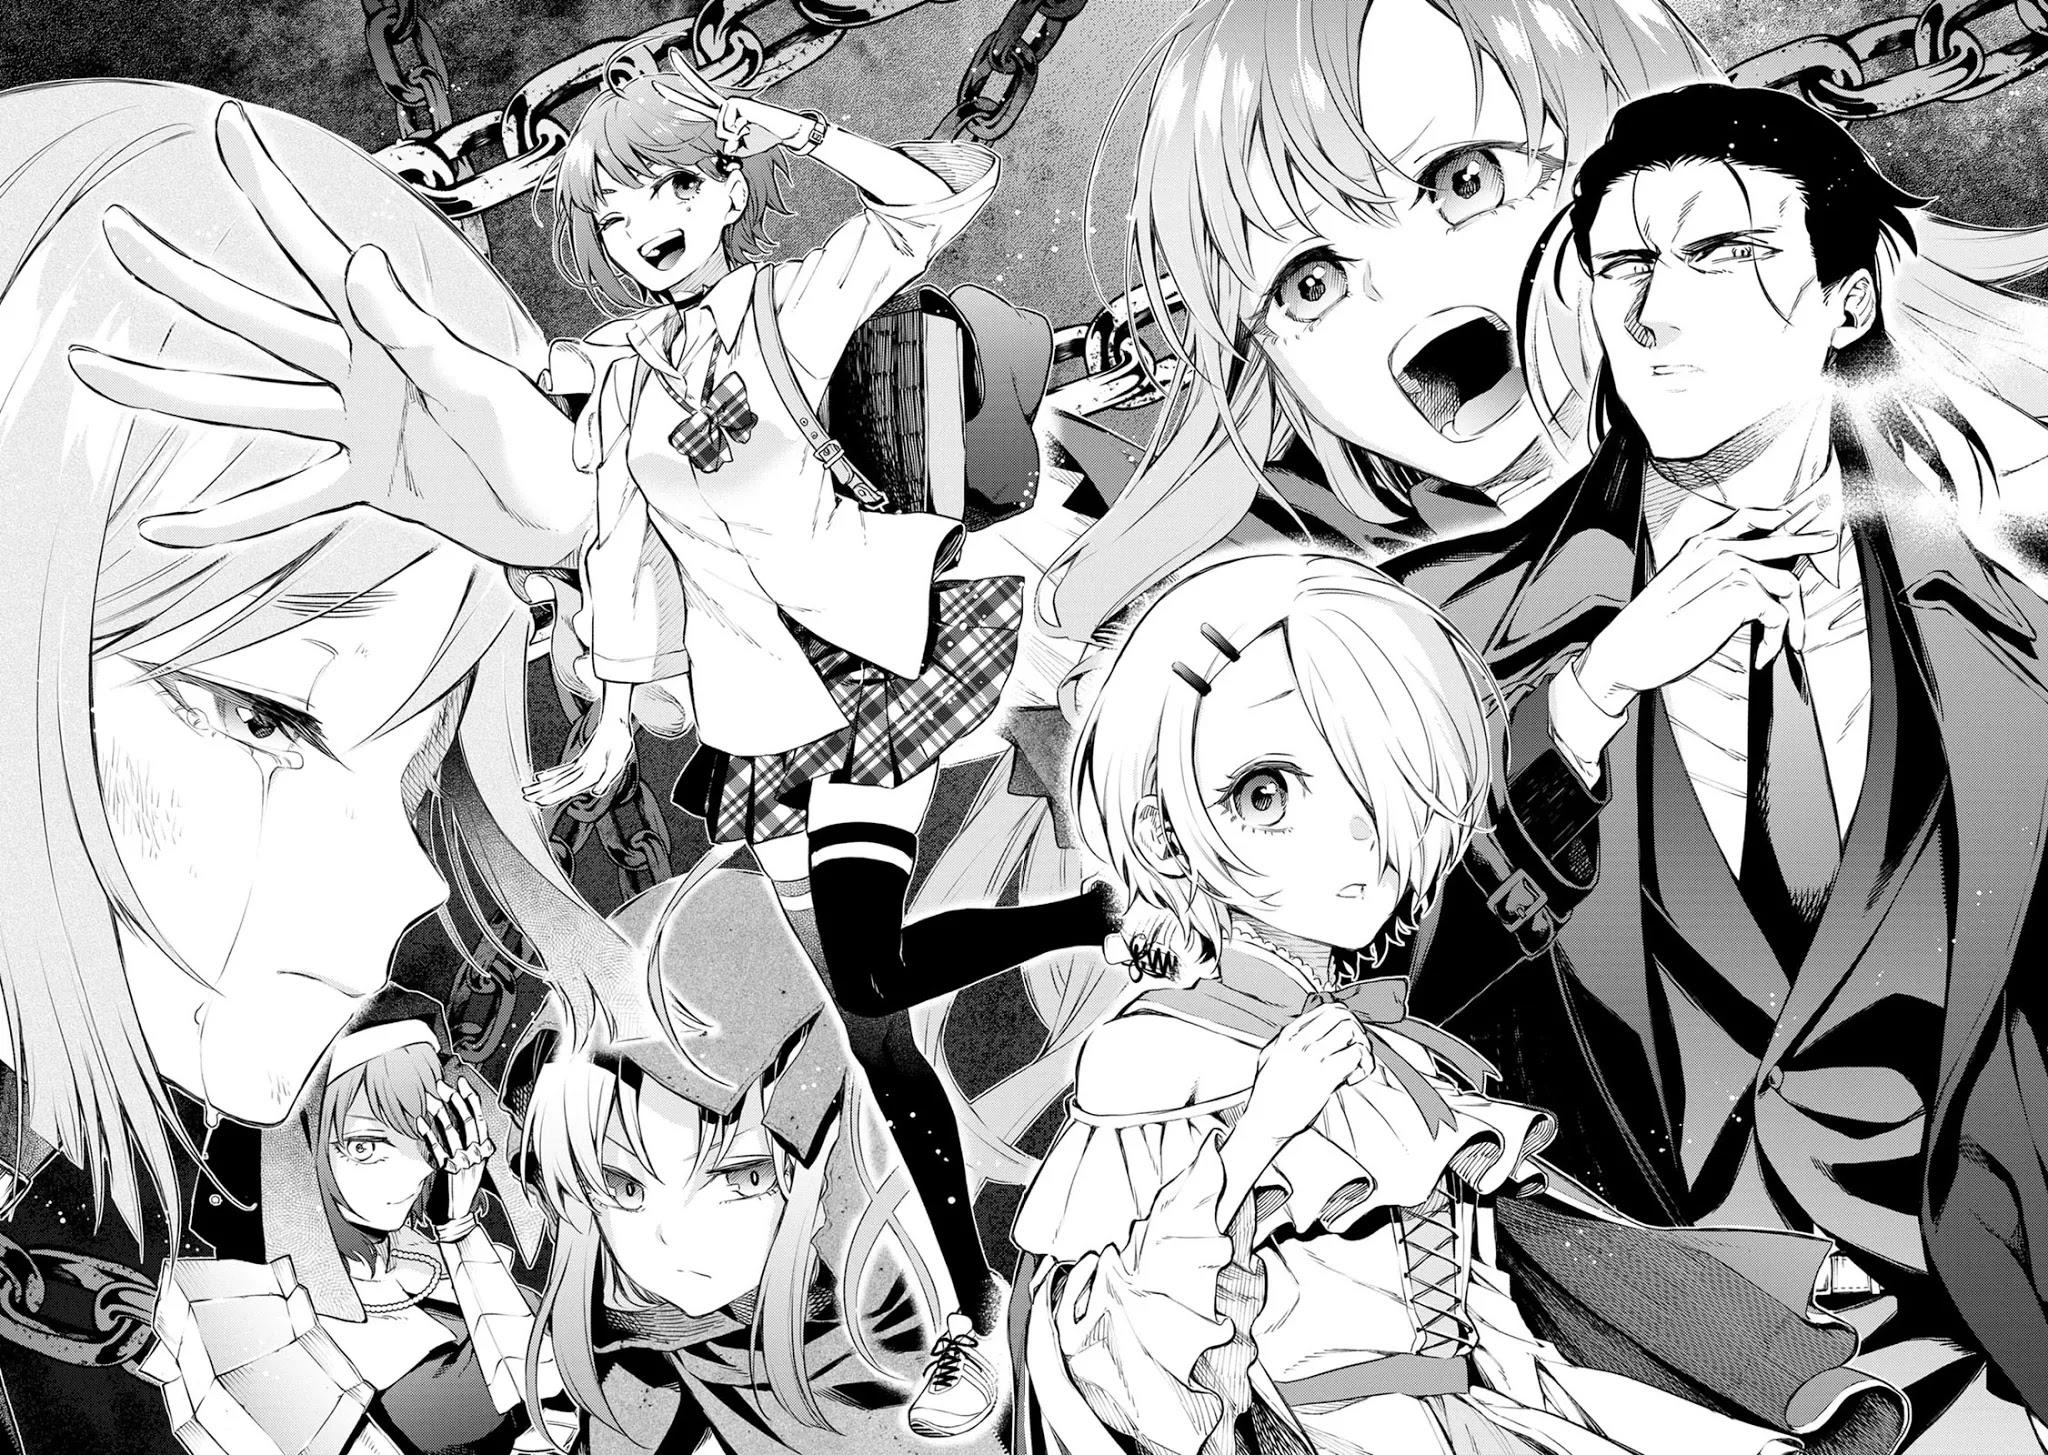 The 'Demon Lord, Retry! R' Manga Getting Anime